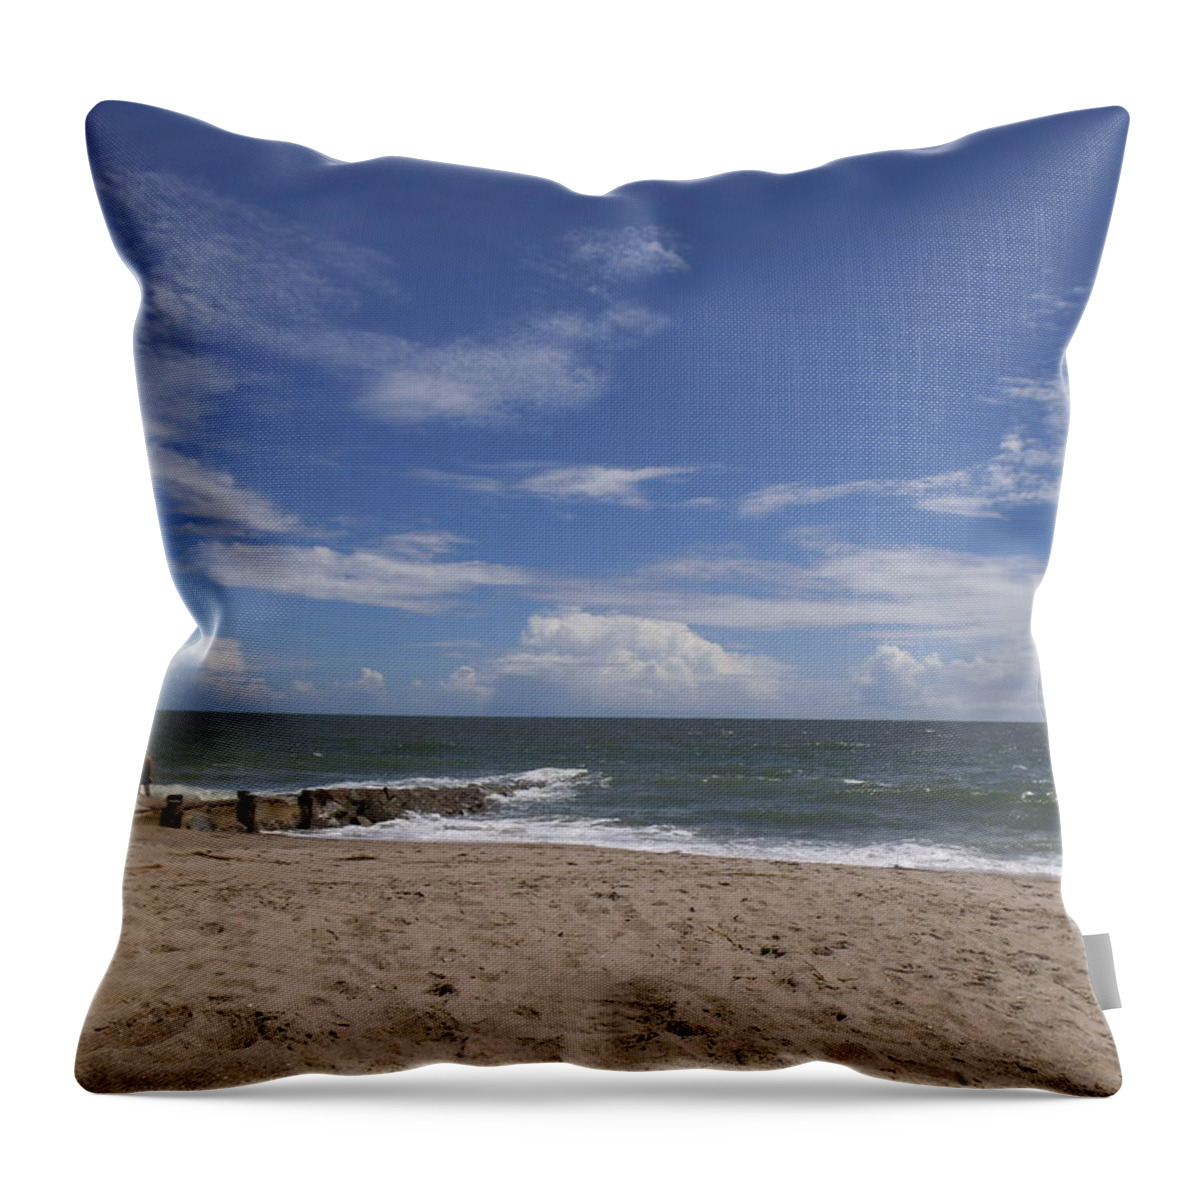  Throw Pillow featuring the photograph Edisto Beach Salutations by Heather E Harman